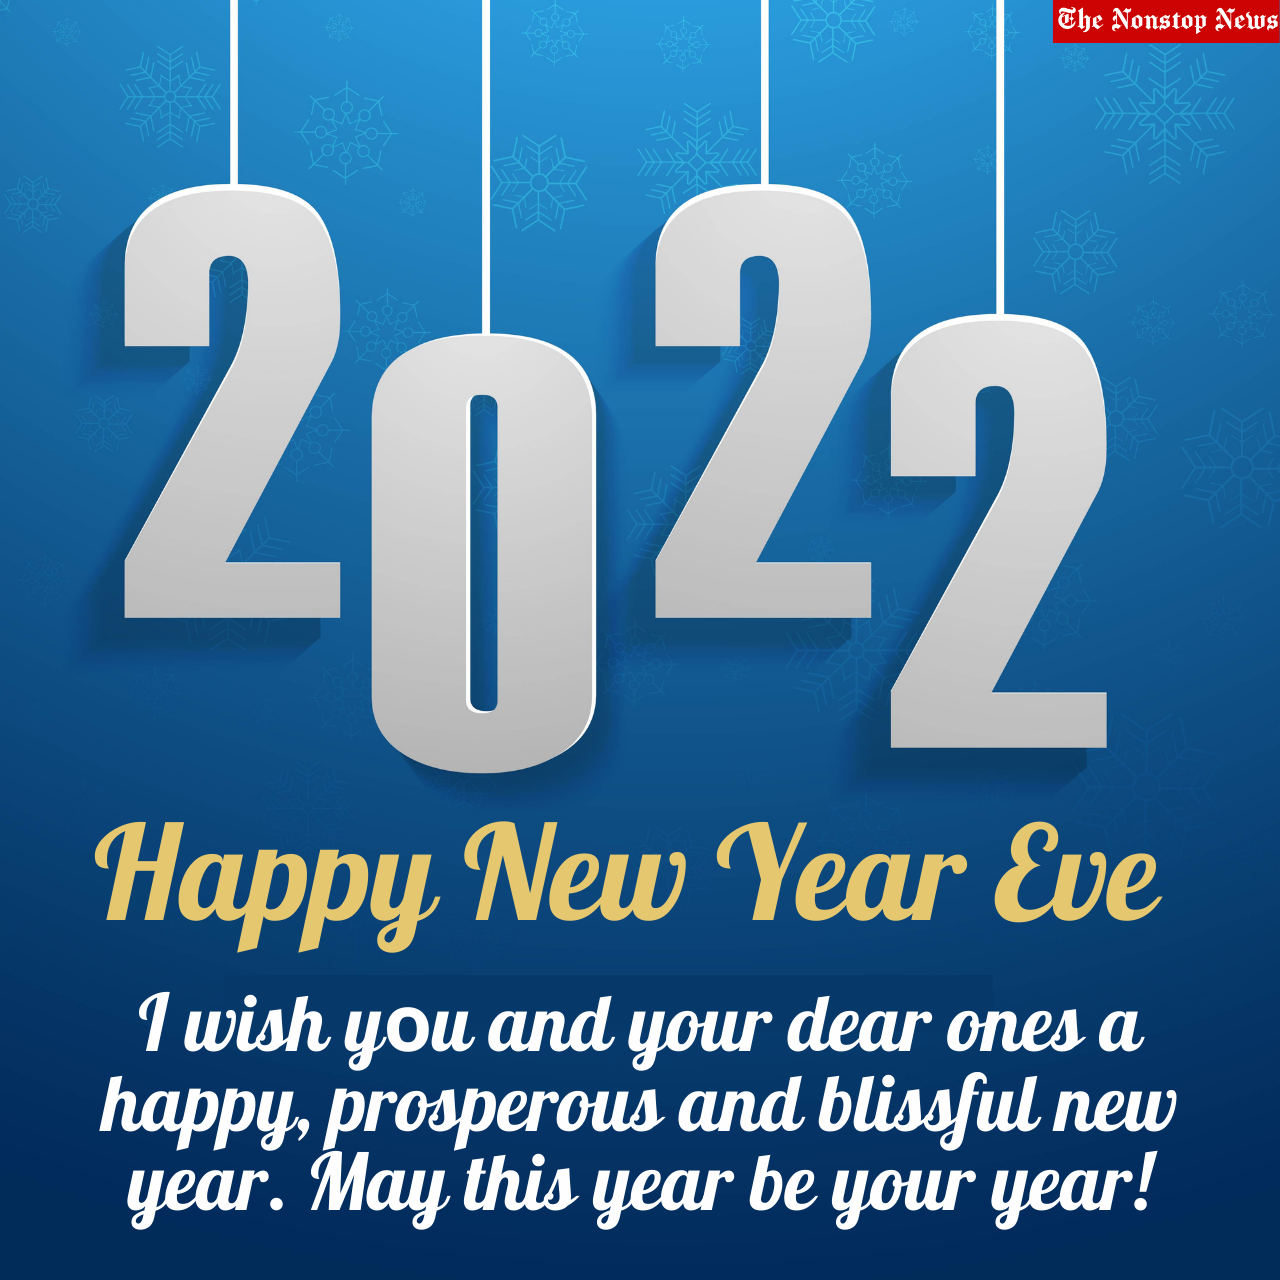 Happy new year eve 2022